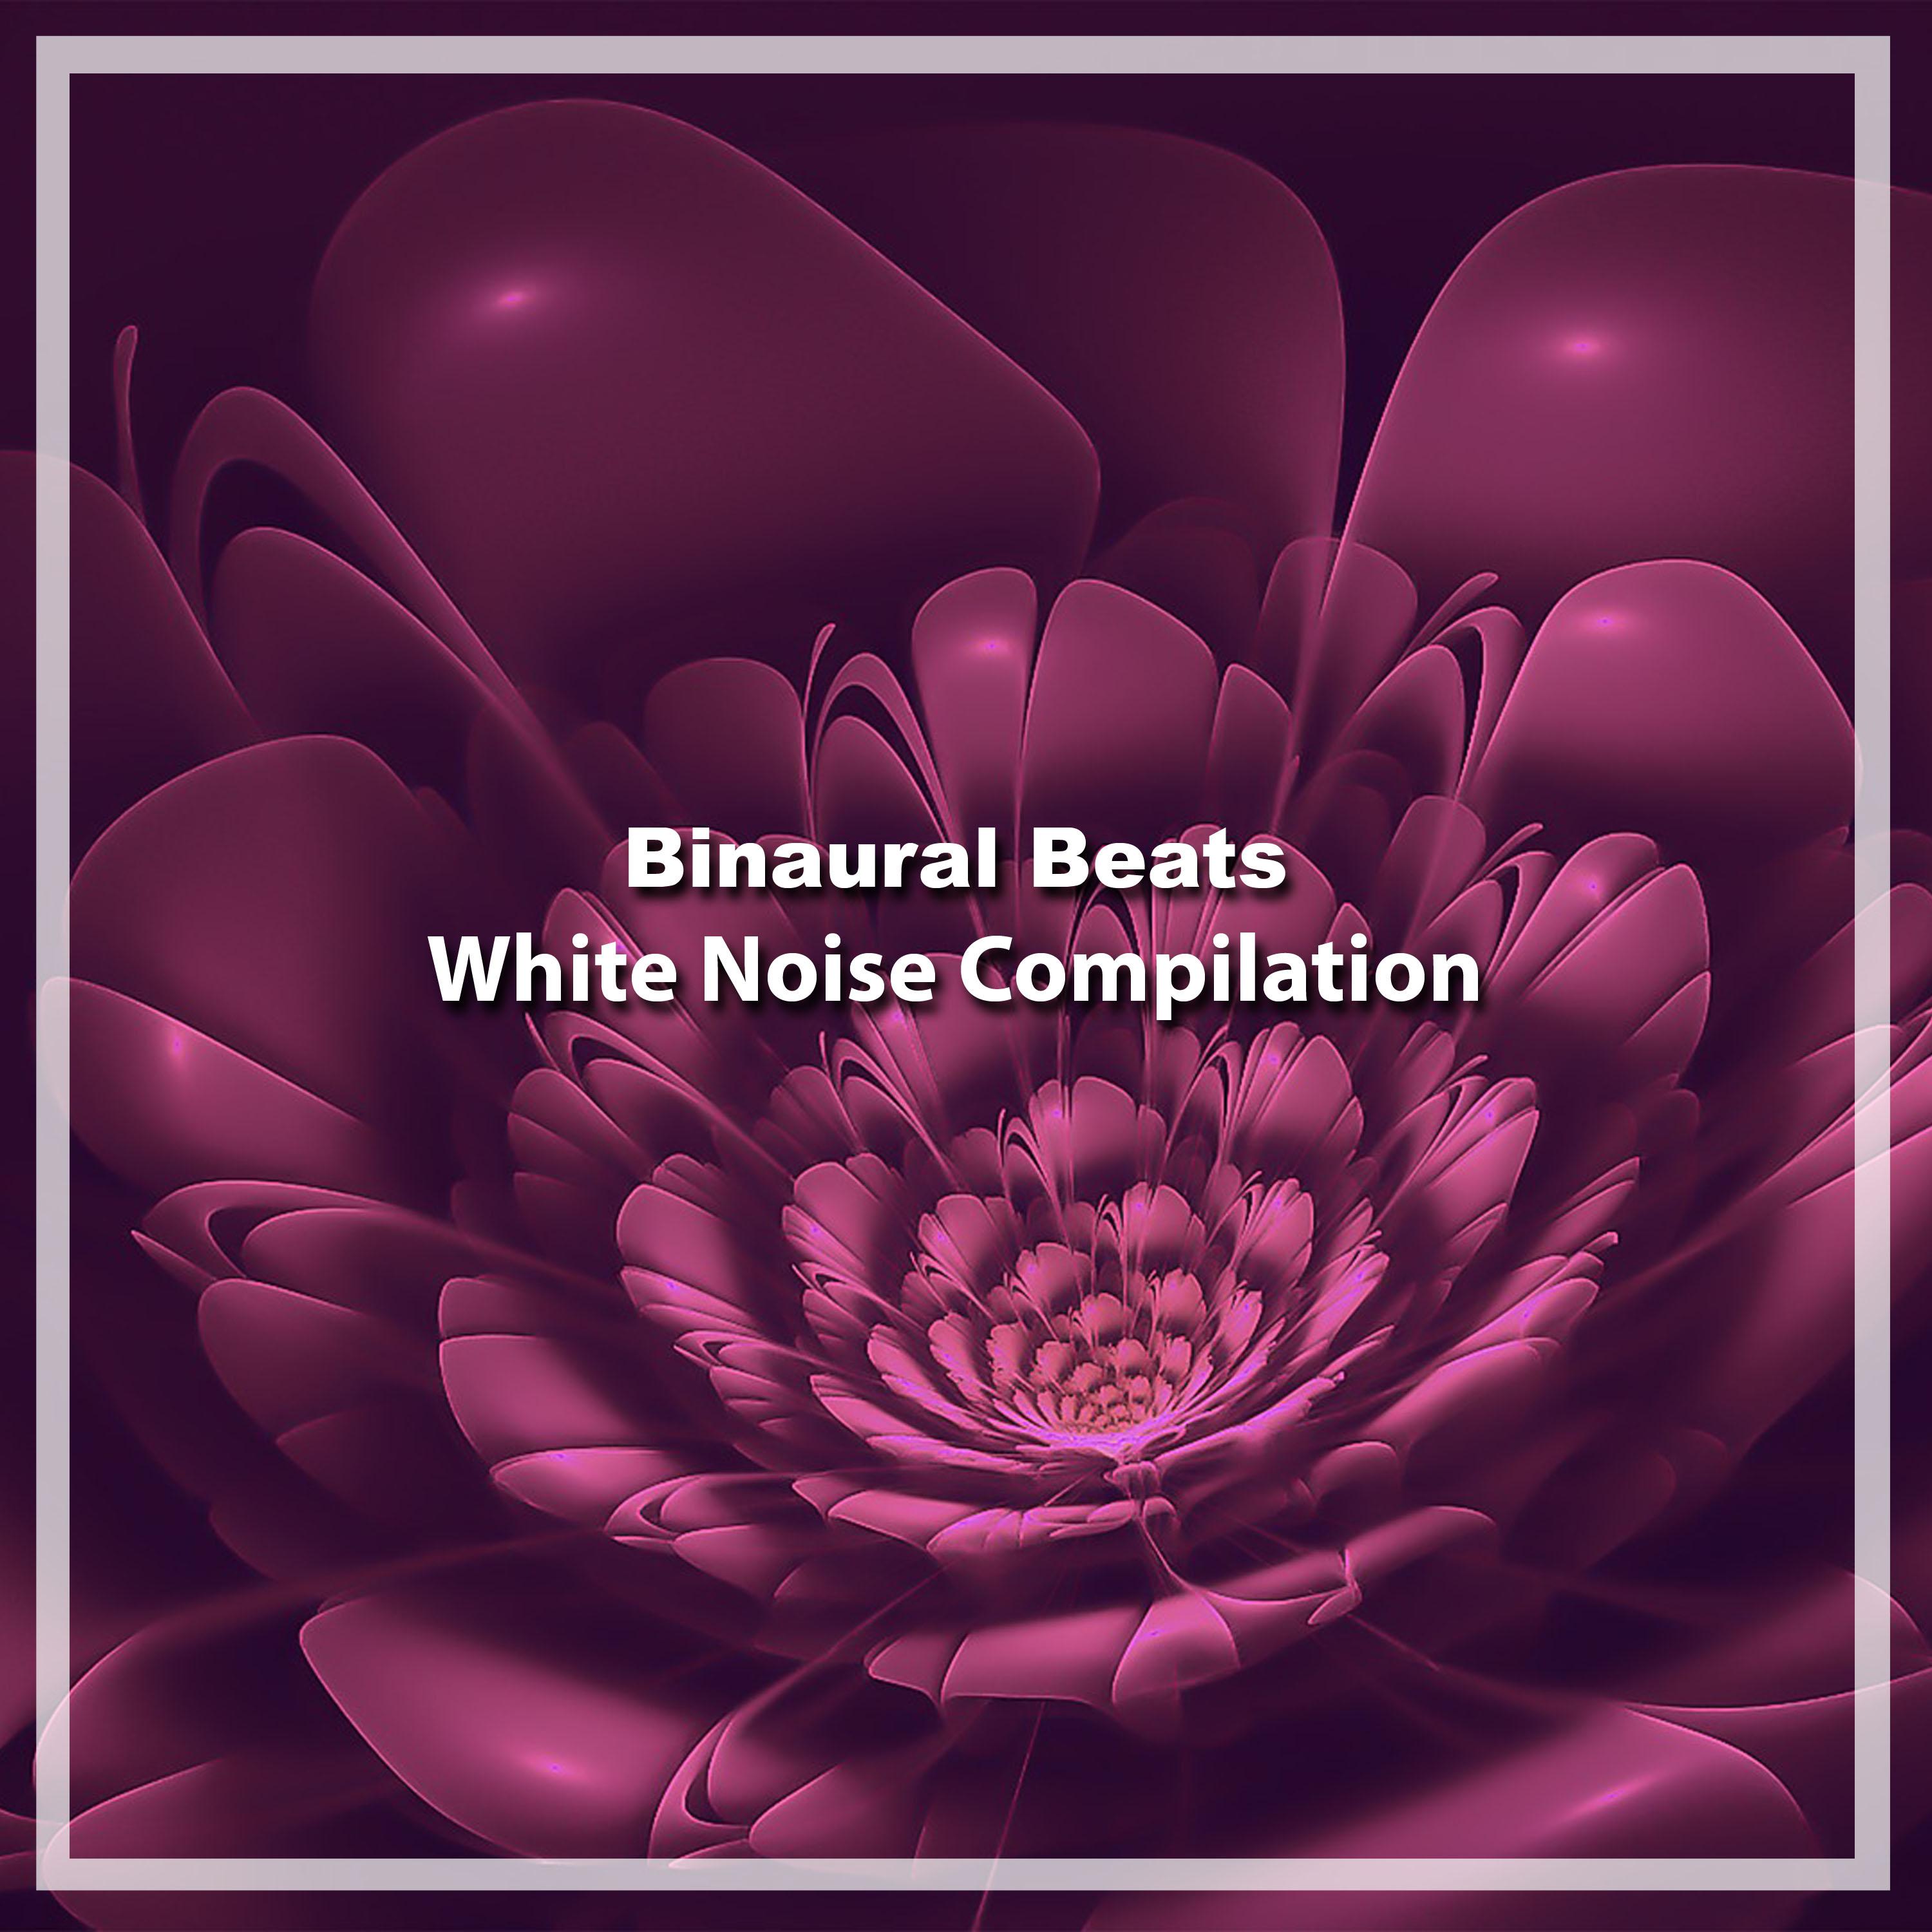 2018 A White Noise Compilation: Binaural Beats